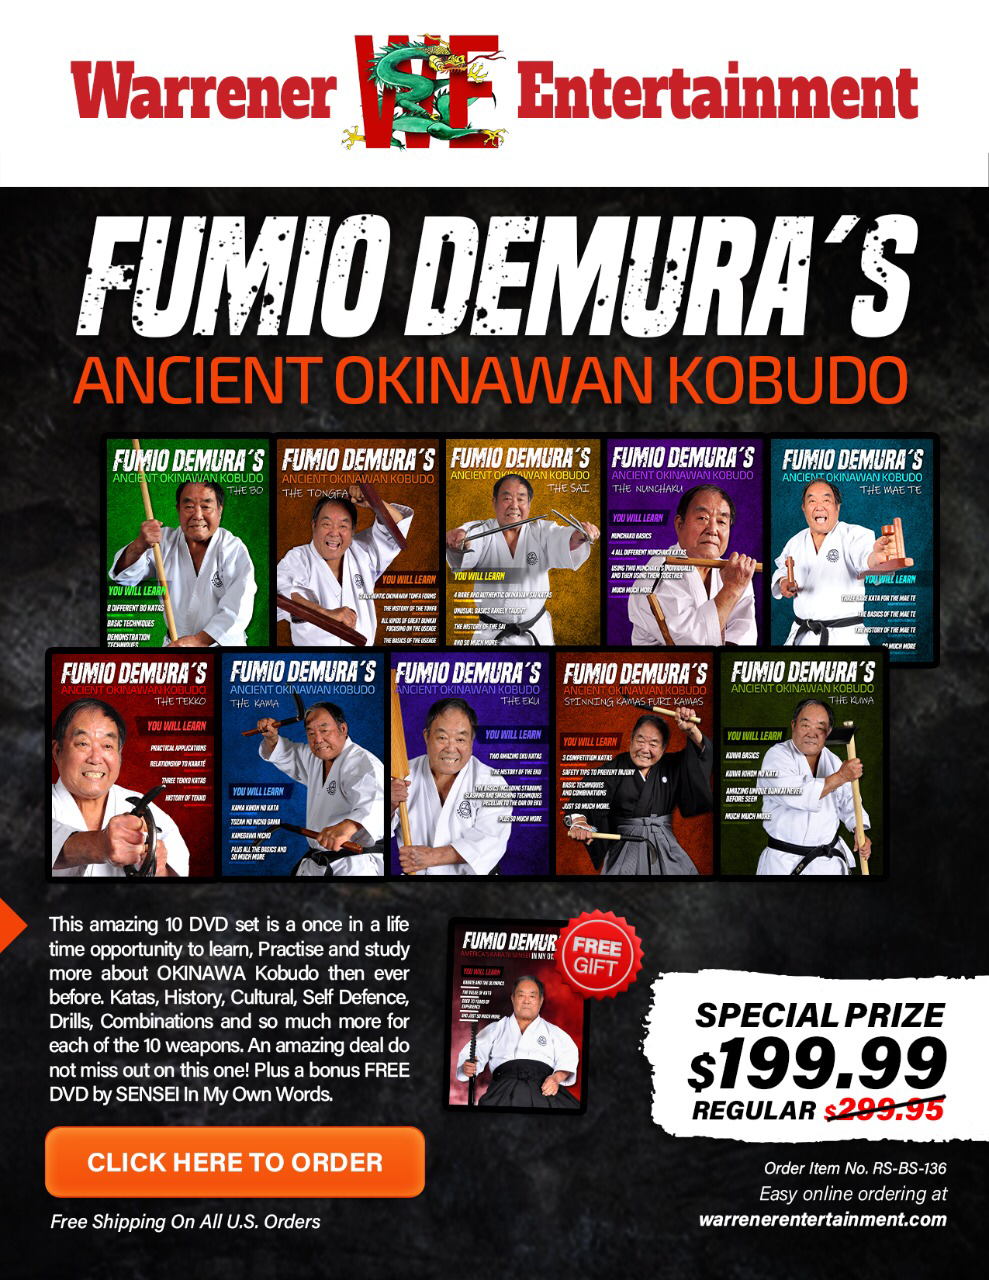 Click here to Fumio Demura's Ancient Okainwan Kobudo 10 DVD box set for $199.99.